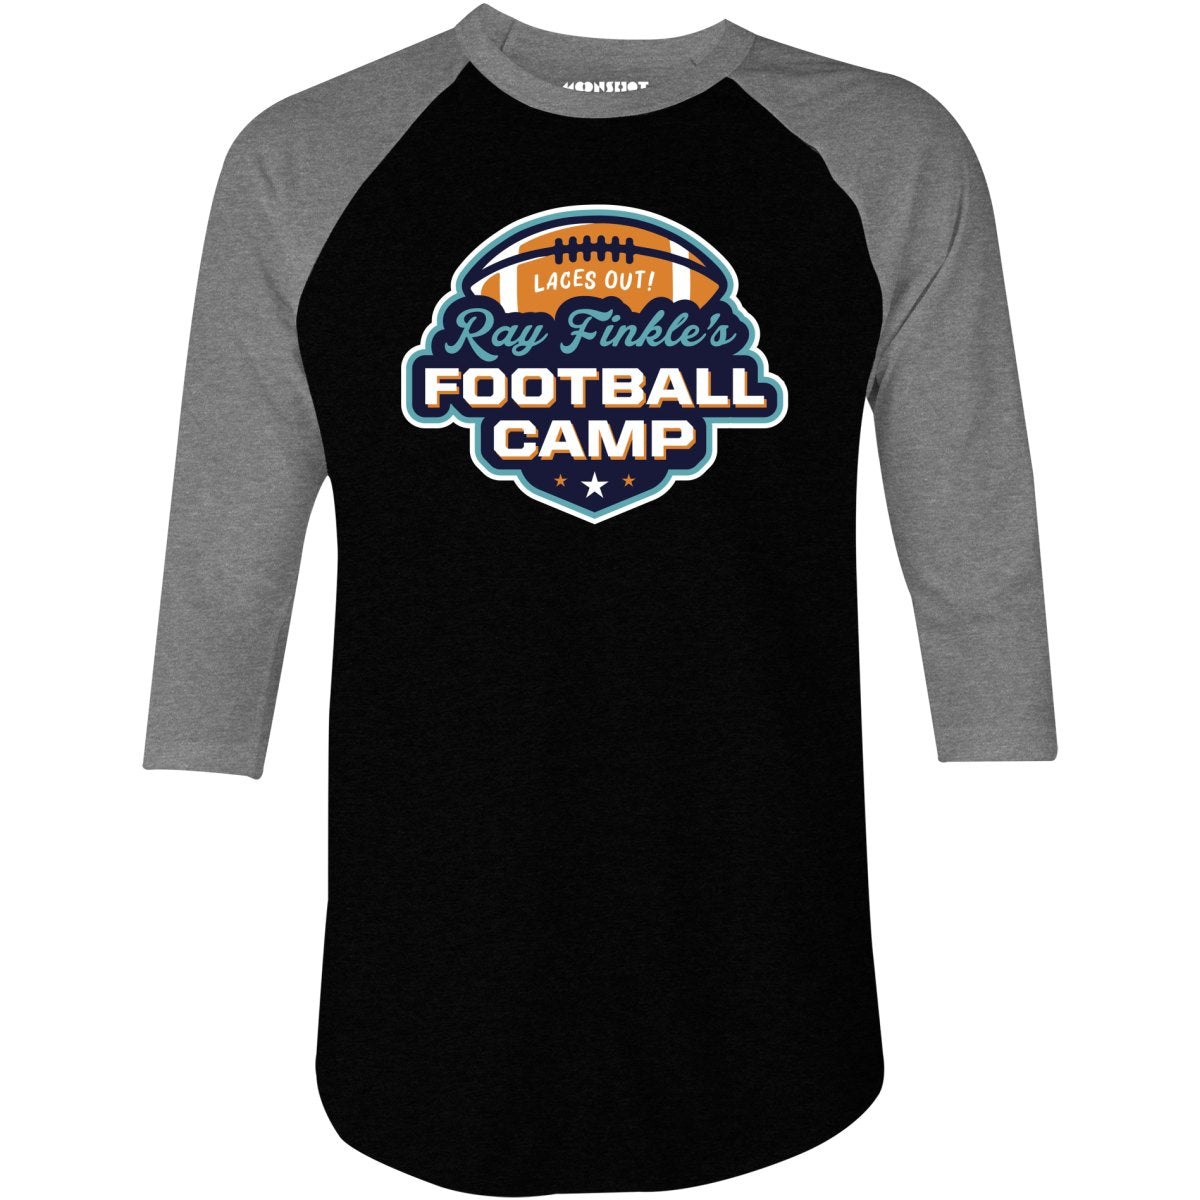 Ray Finkle's Football Camp - 3/4 Sleeve Raglan T-Shirt